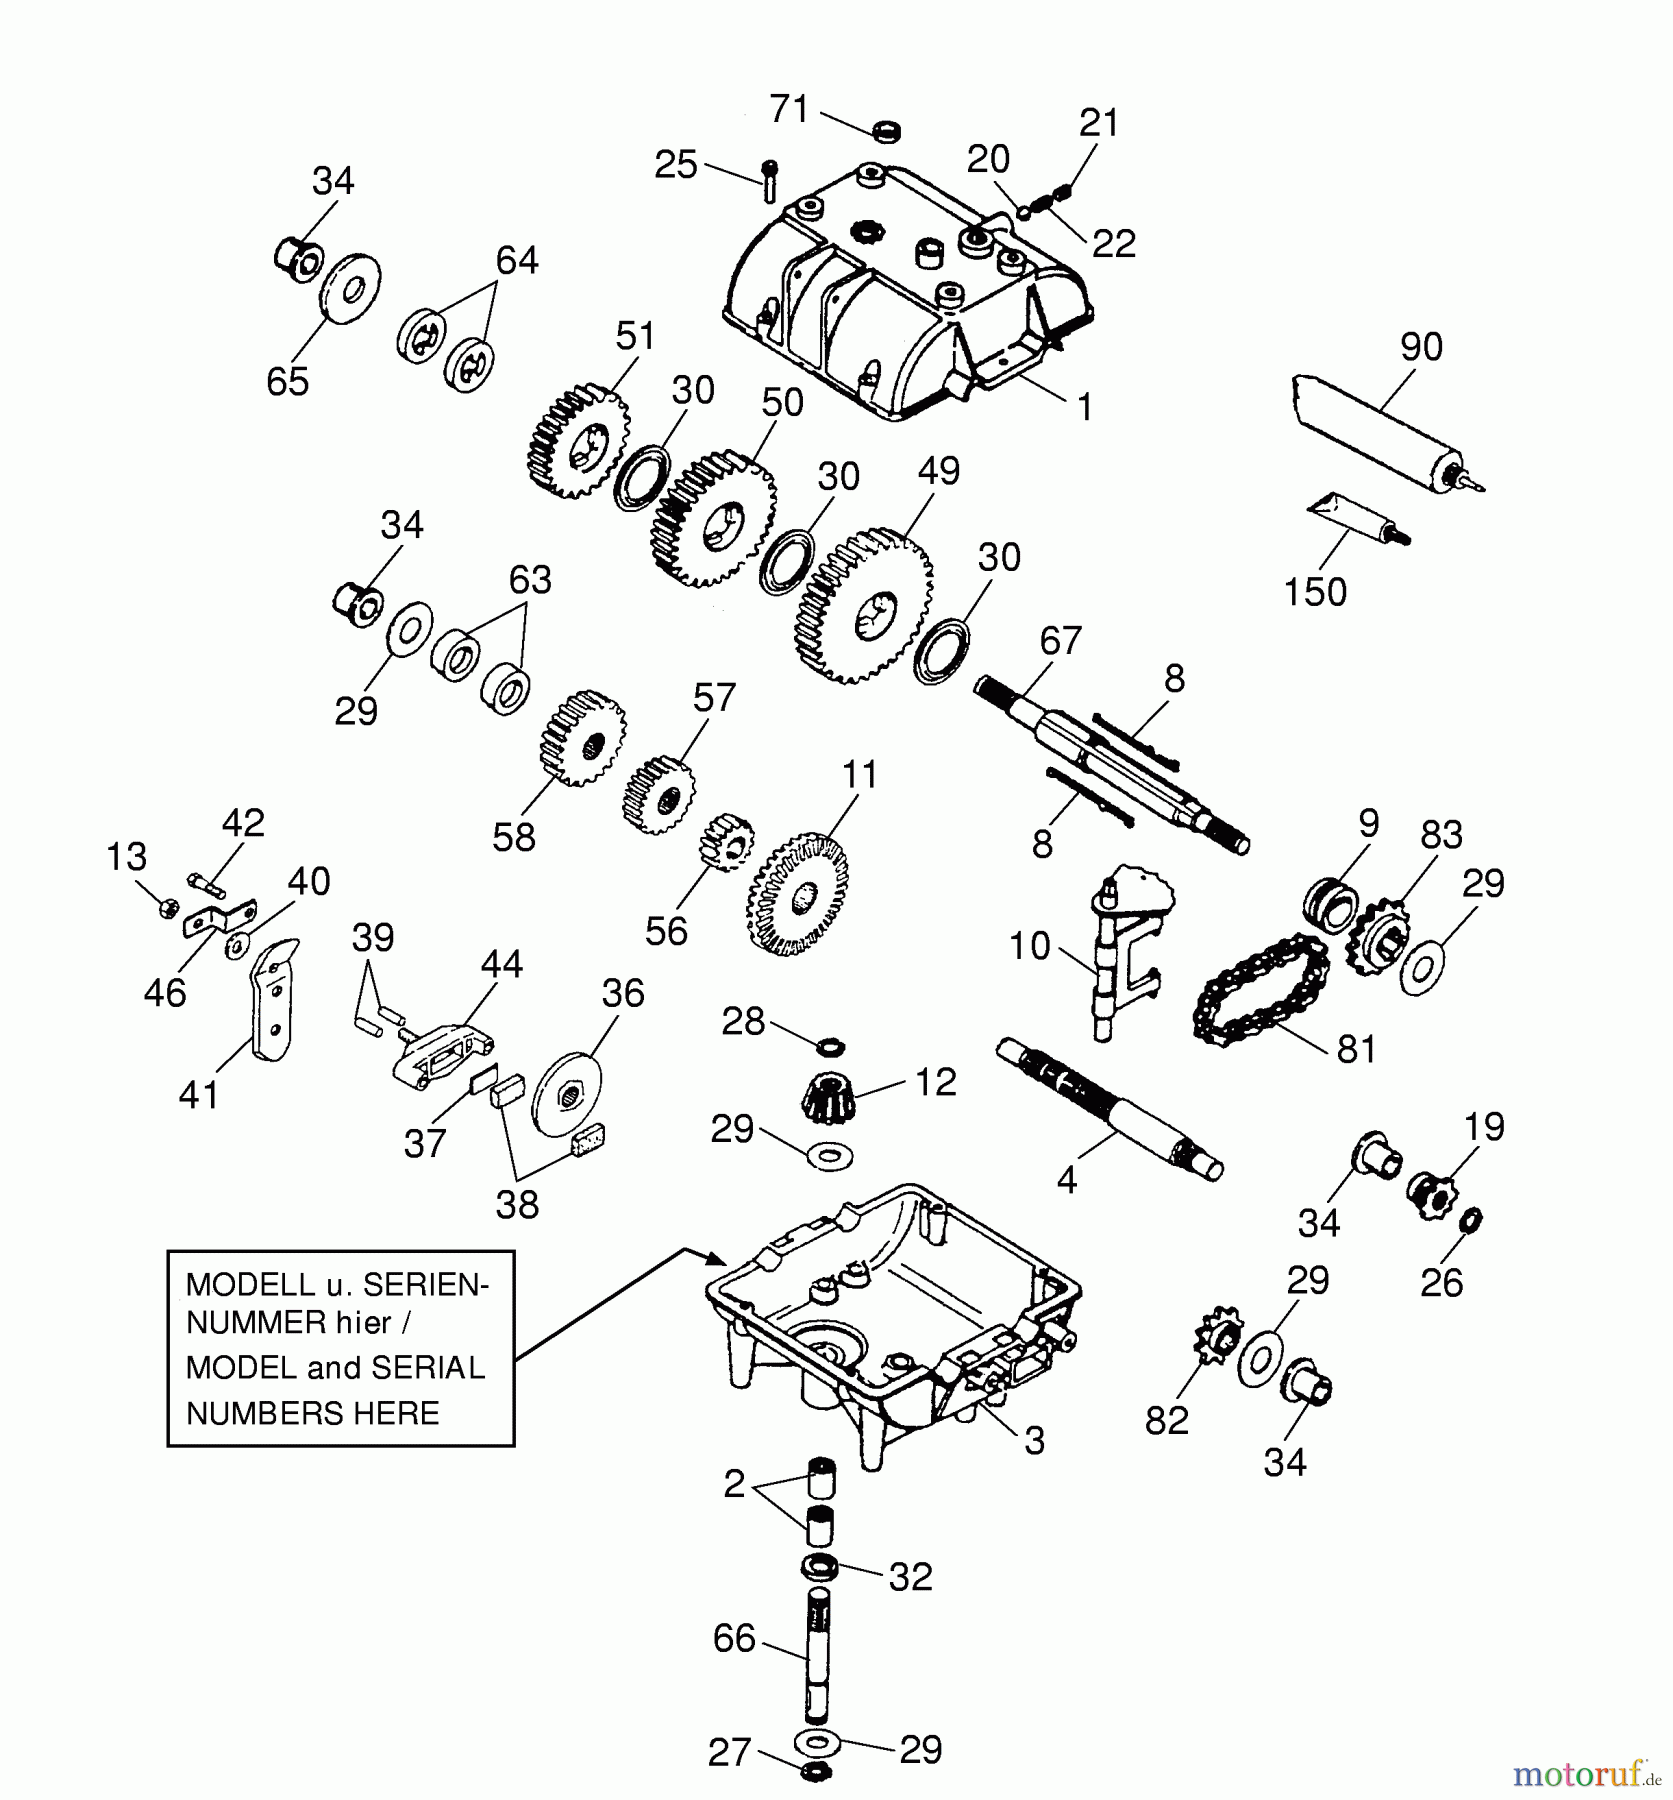  Wolf-Garten Scooter OHV 3 6990000 Series B, C  (1999) Gearbox